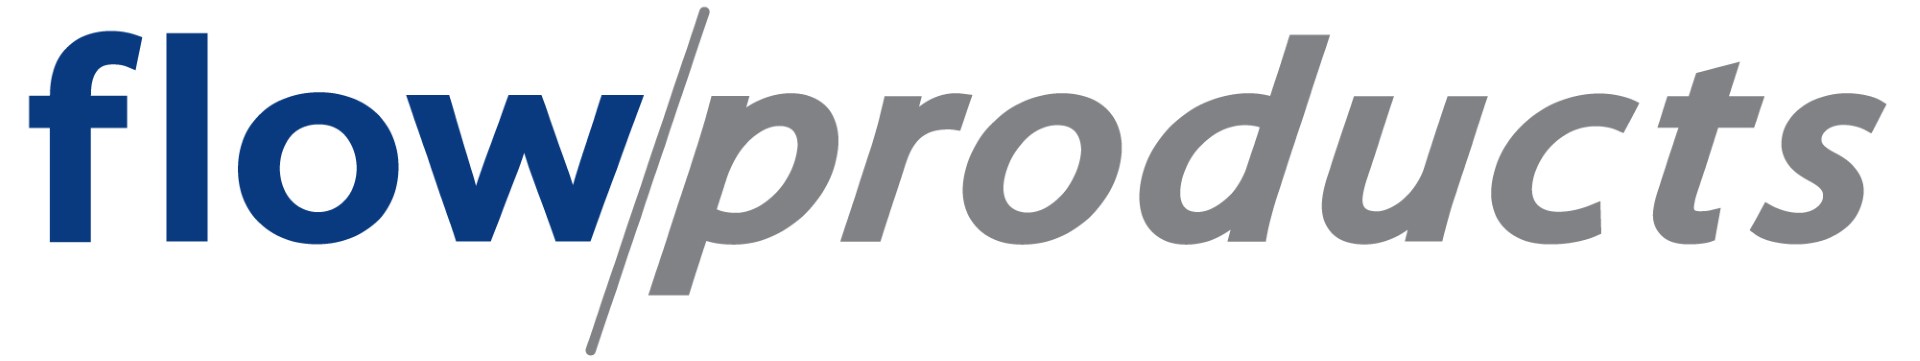 Logo-Flow-Products-600dpi